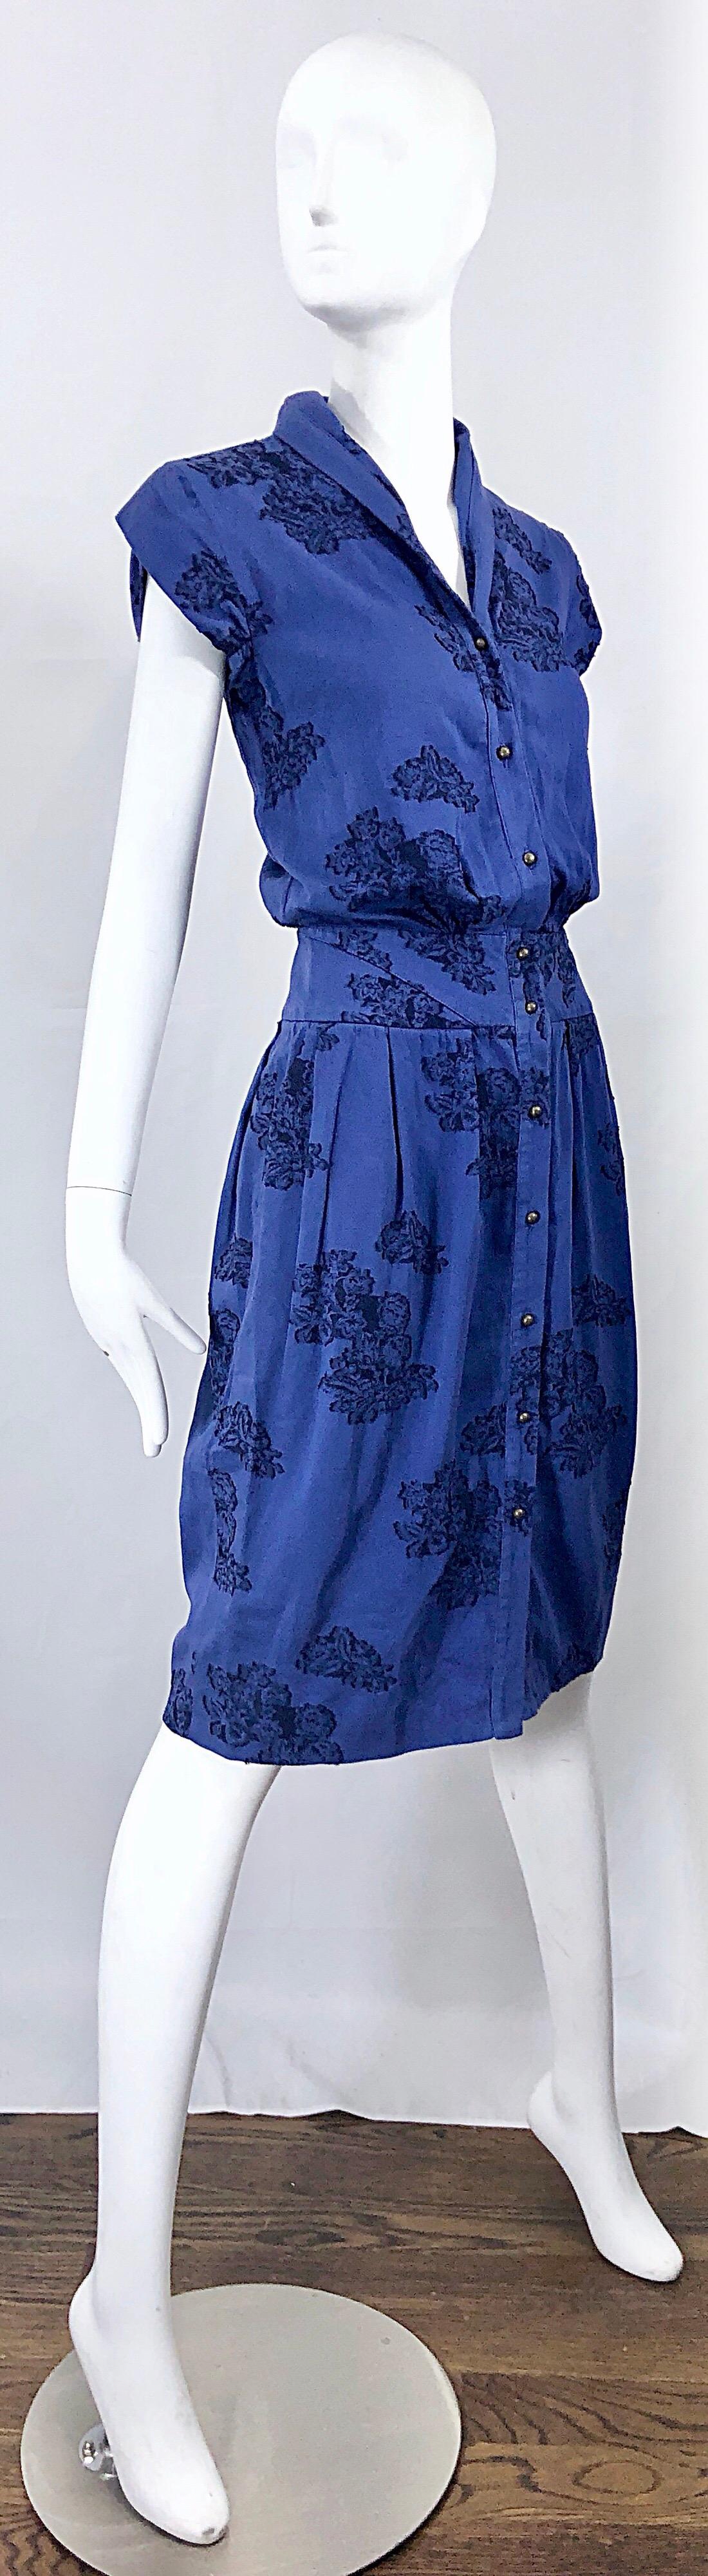 Alexander McQueen Blue + Black Lace Print Size 40 1950s Style Bustle Dress 1